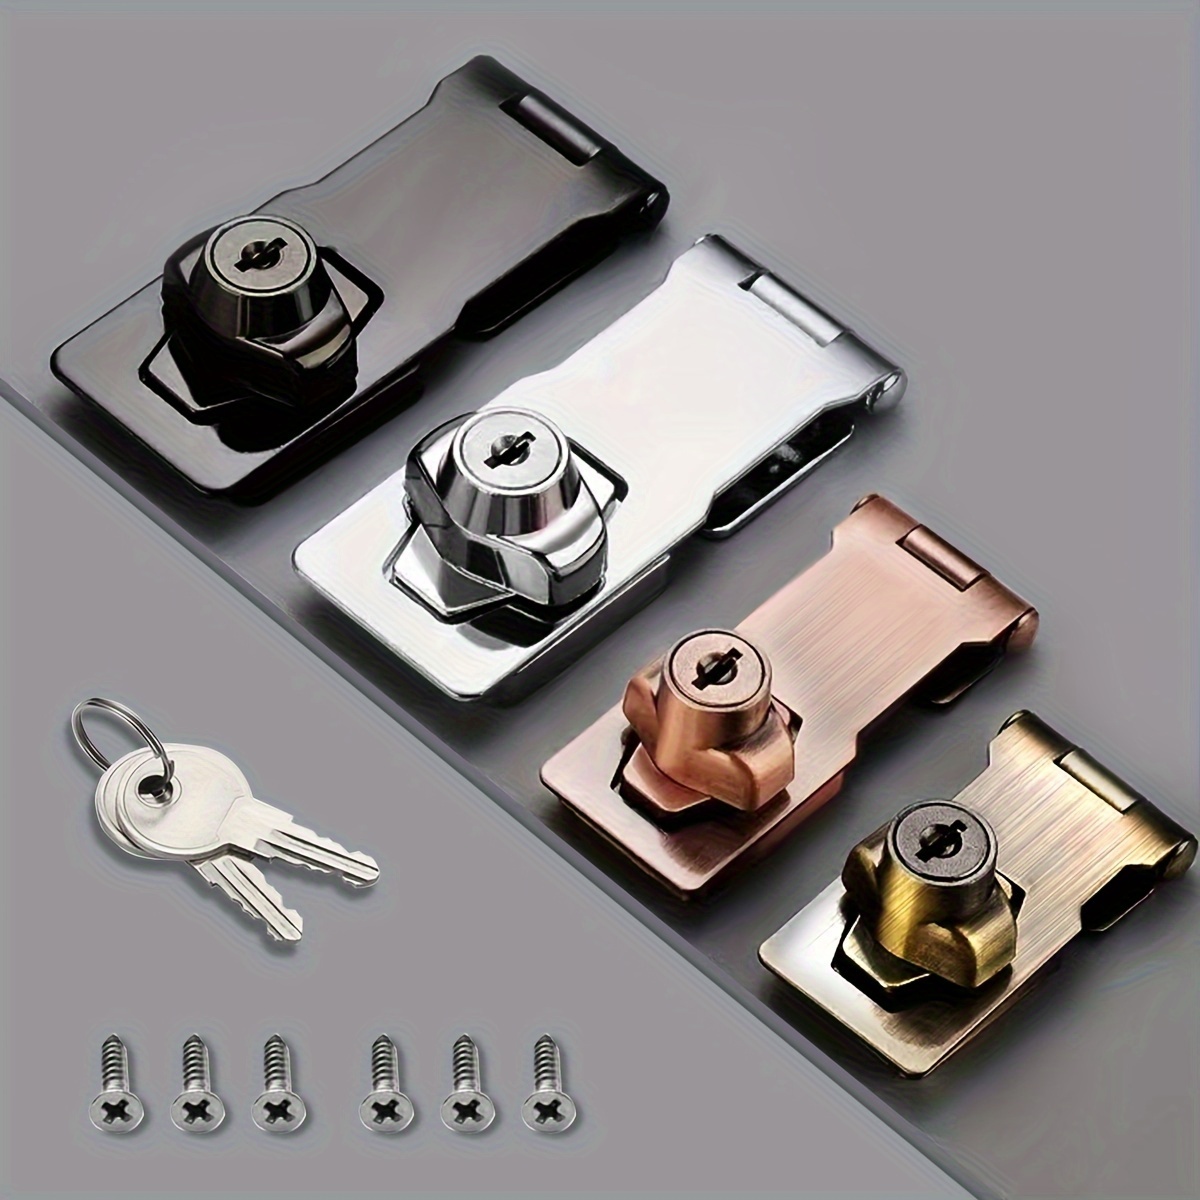 Keyed Hasp Cabinet Door Latch Lock - 4 Pack 2.5 Inch Twist Knob Key Locking  Hasp, Keyed Different Metal Closet Door Locks, Desk Locks for Drawers with